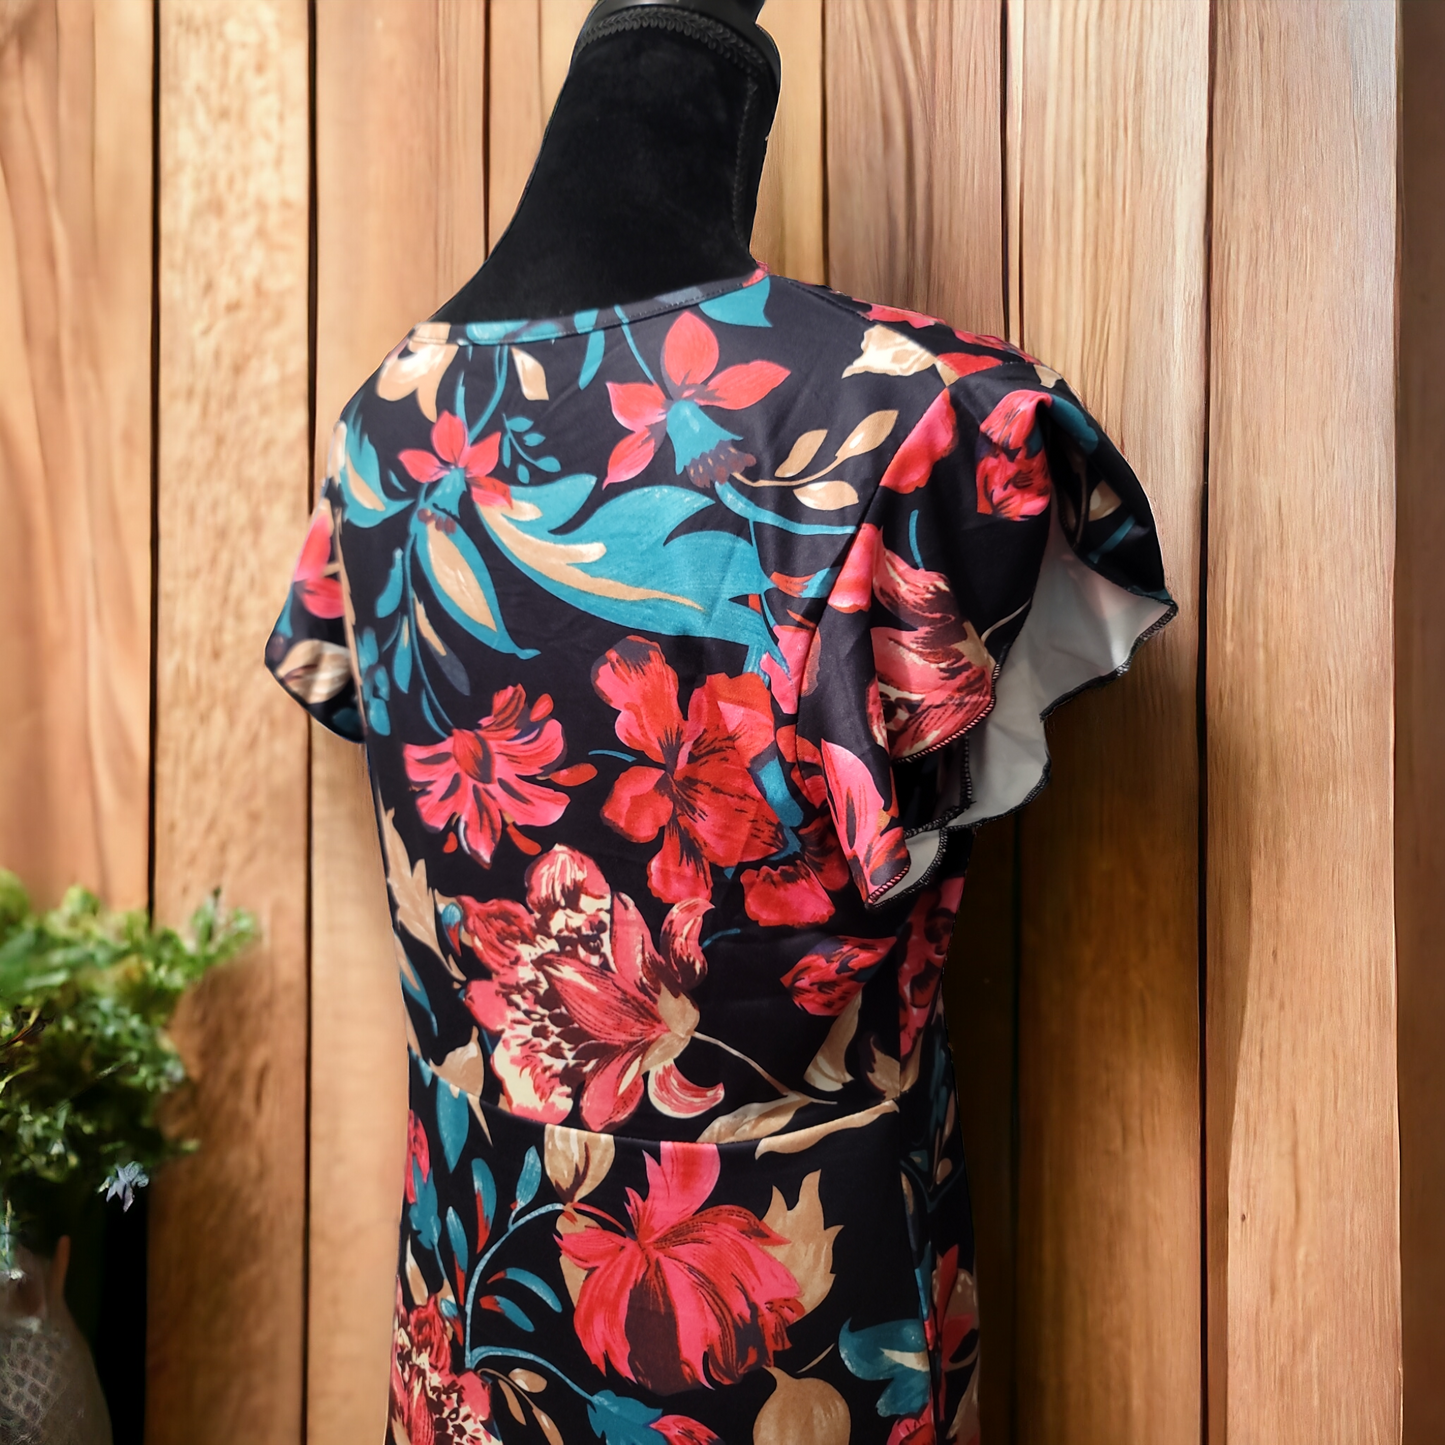 Floral Print Dress With Ruffle Hem Size L